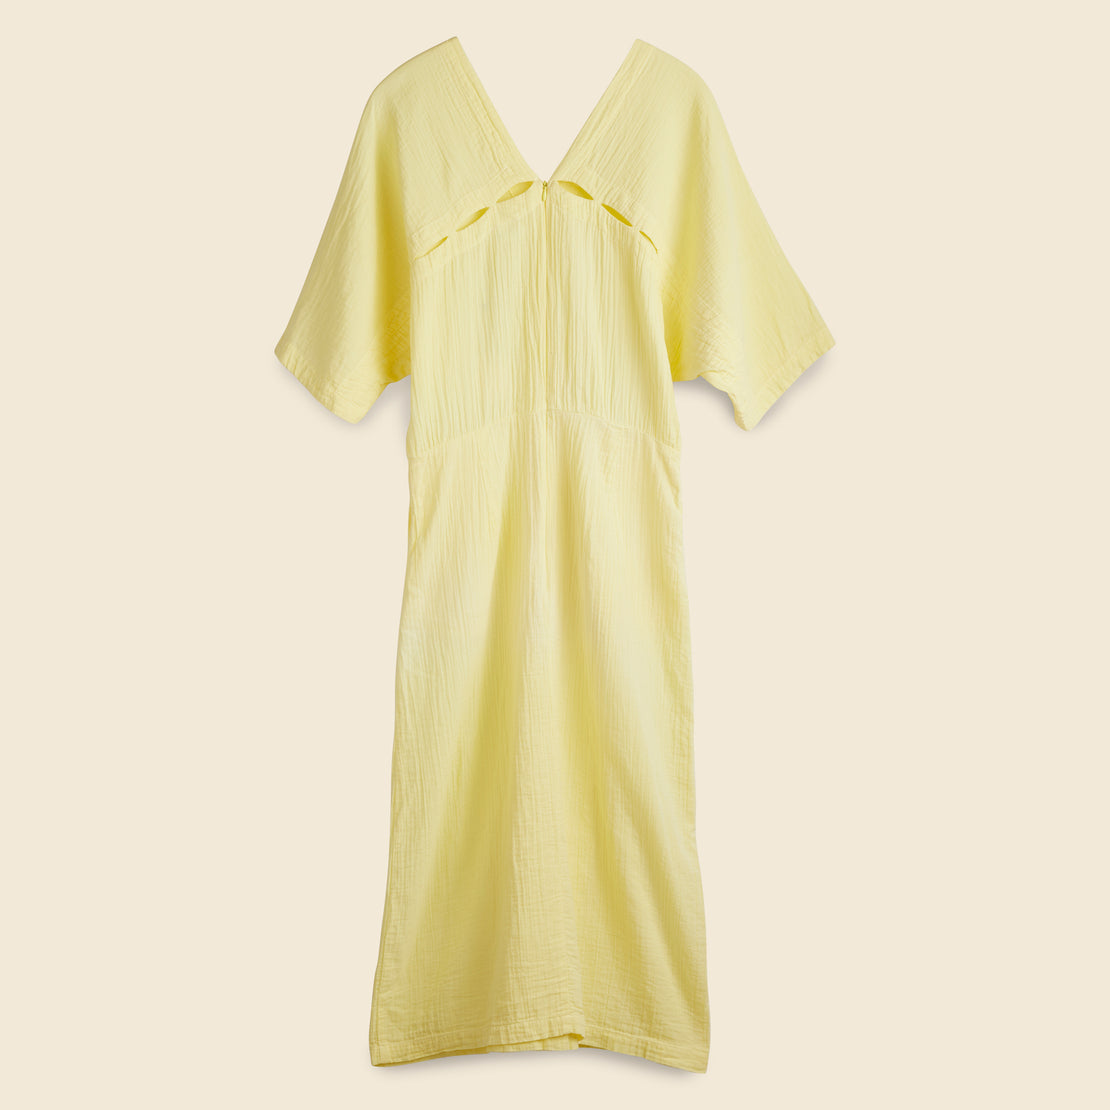 Hinata Dress - Lemon - Atelier Delphine - STAG Provisions - W - Onepiece - Dress